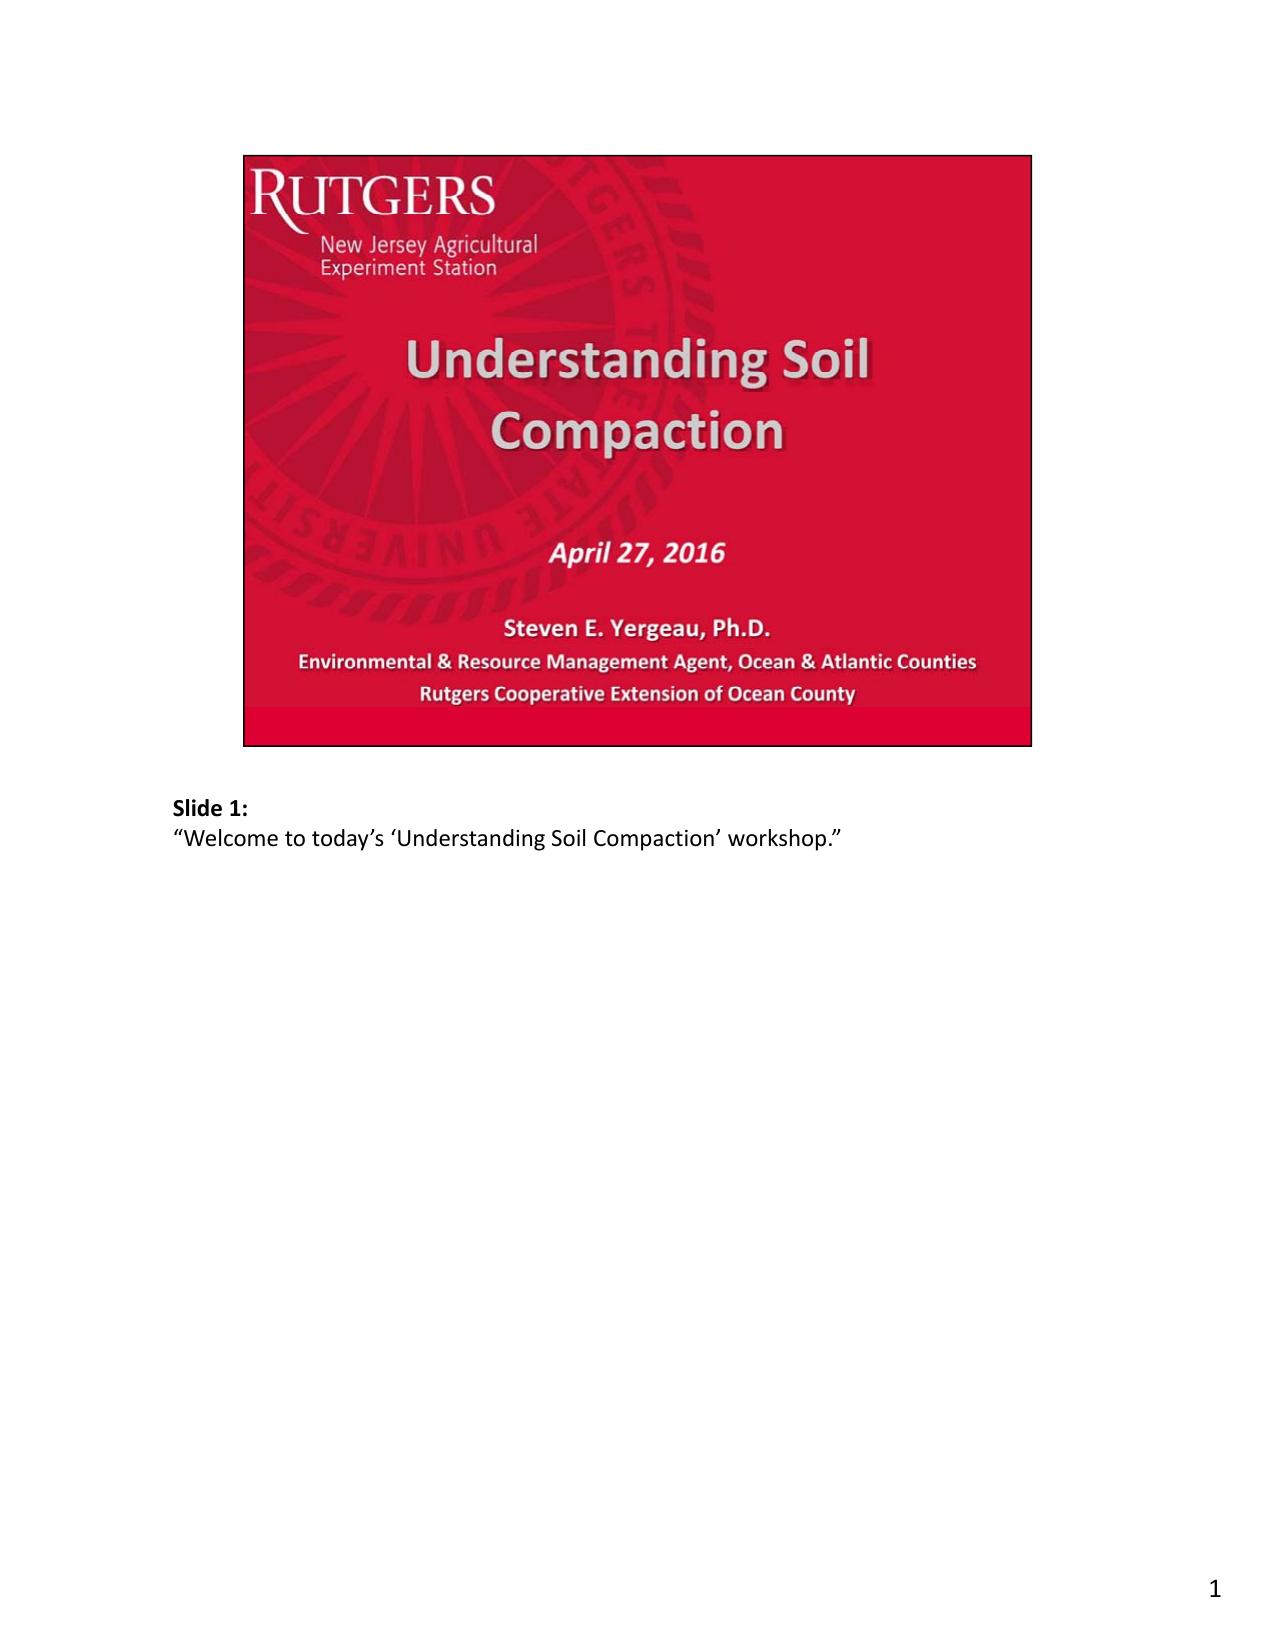 Microsoft PowerPoint - Understanding Soil Compaction